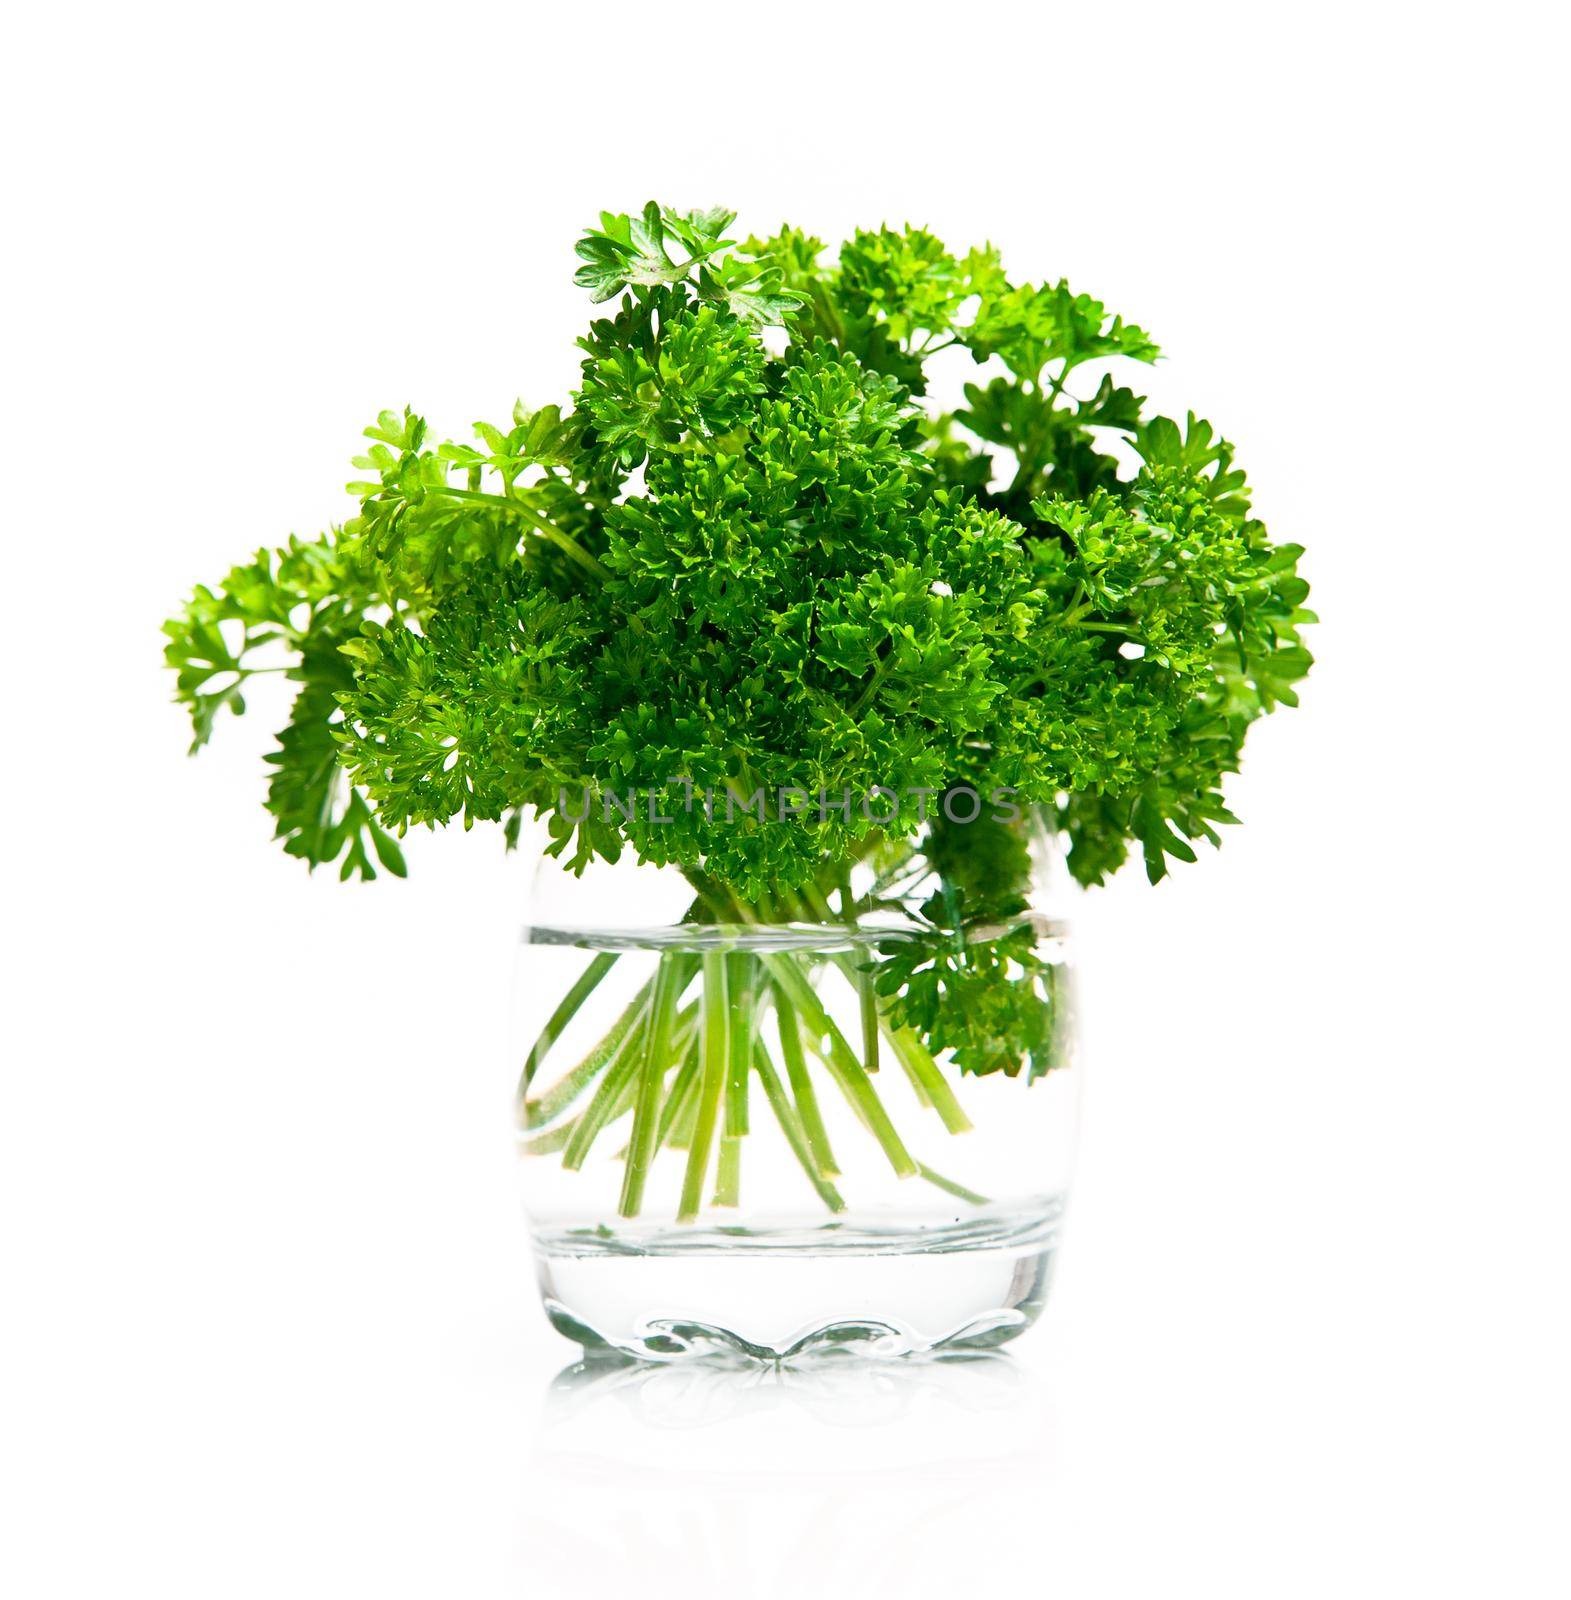 Fresh leaf of parsley by tan4ikk1